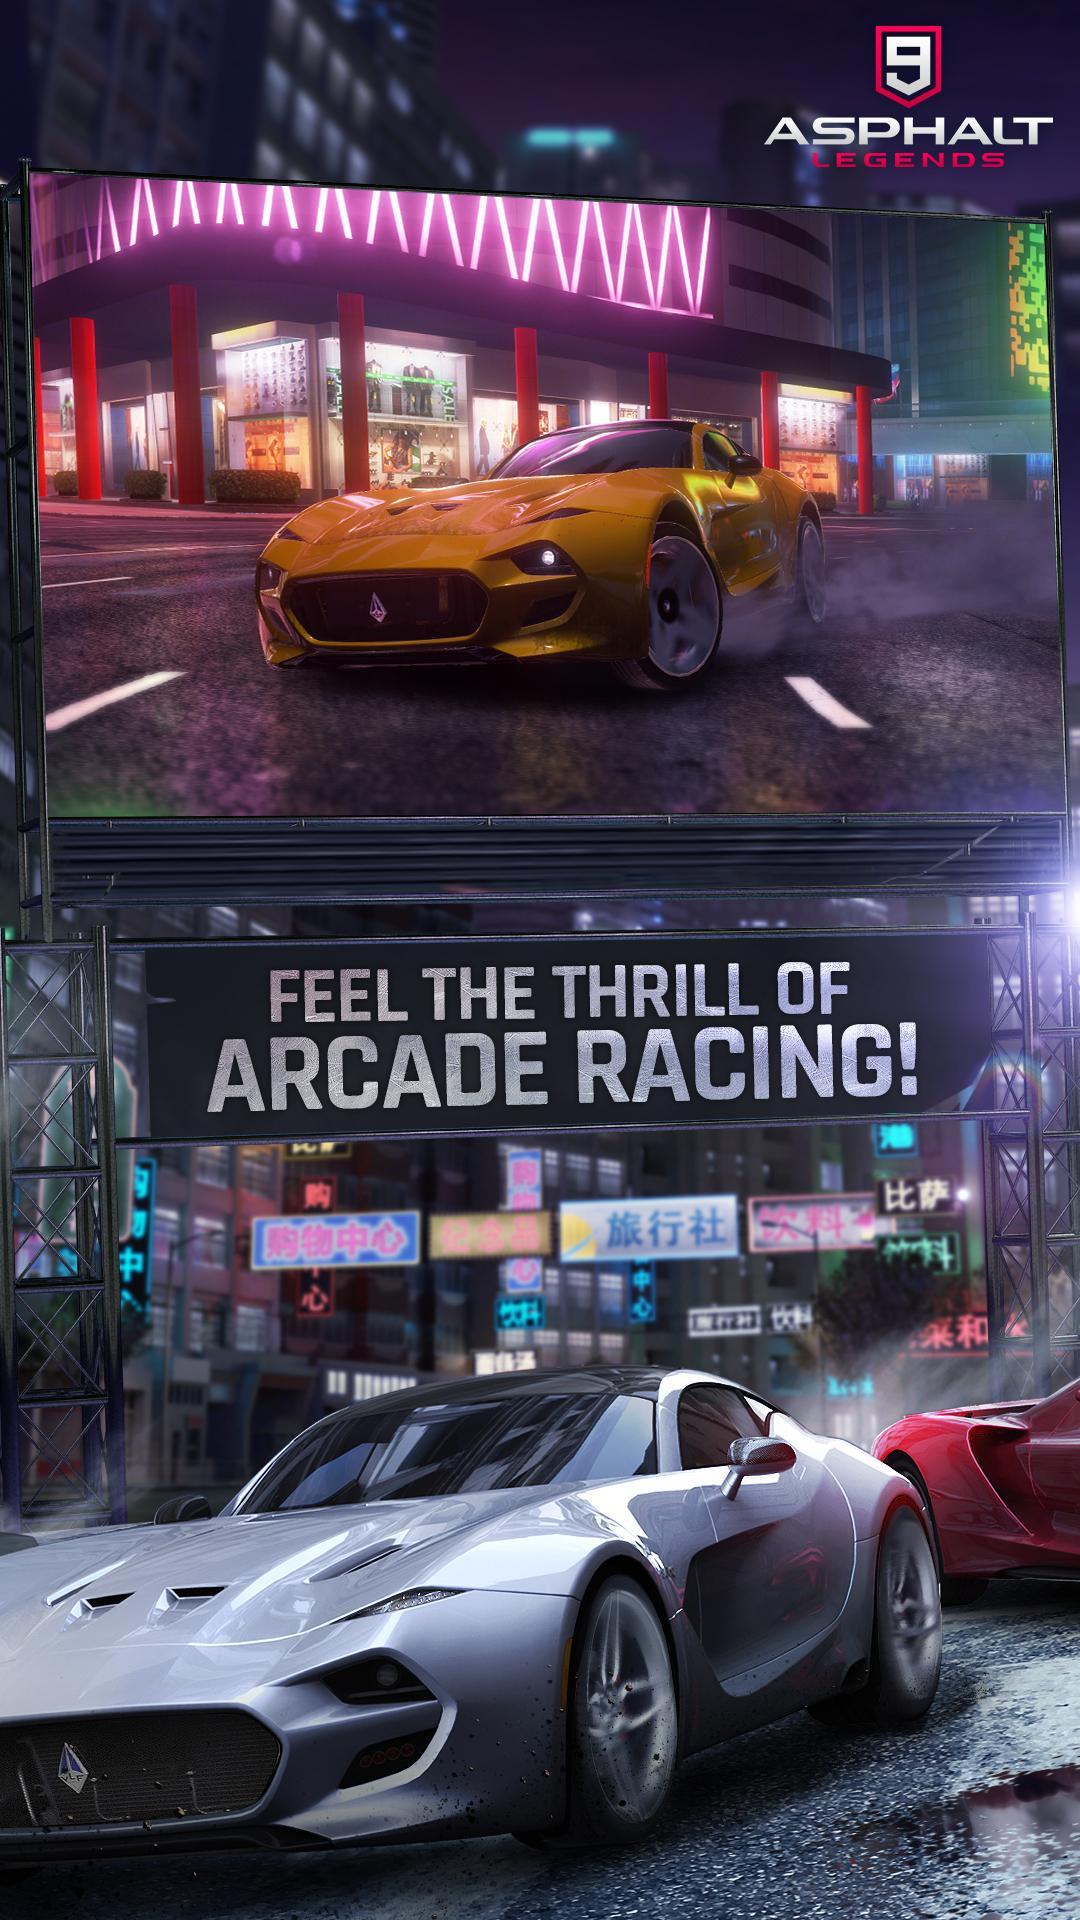 Asphalt 9 Legends - Epic Car Action Racing Game 2.5.3a Screenshot 3